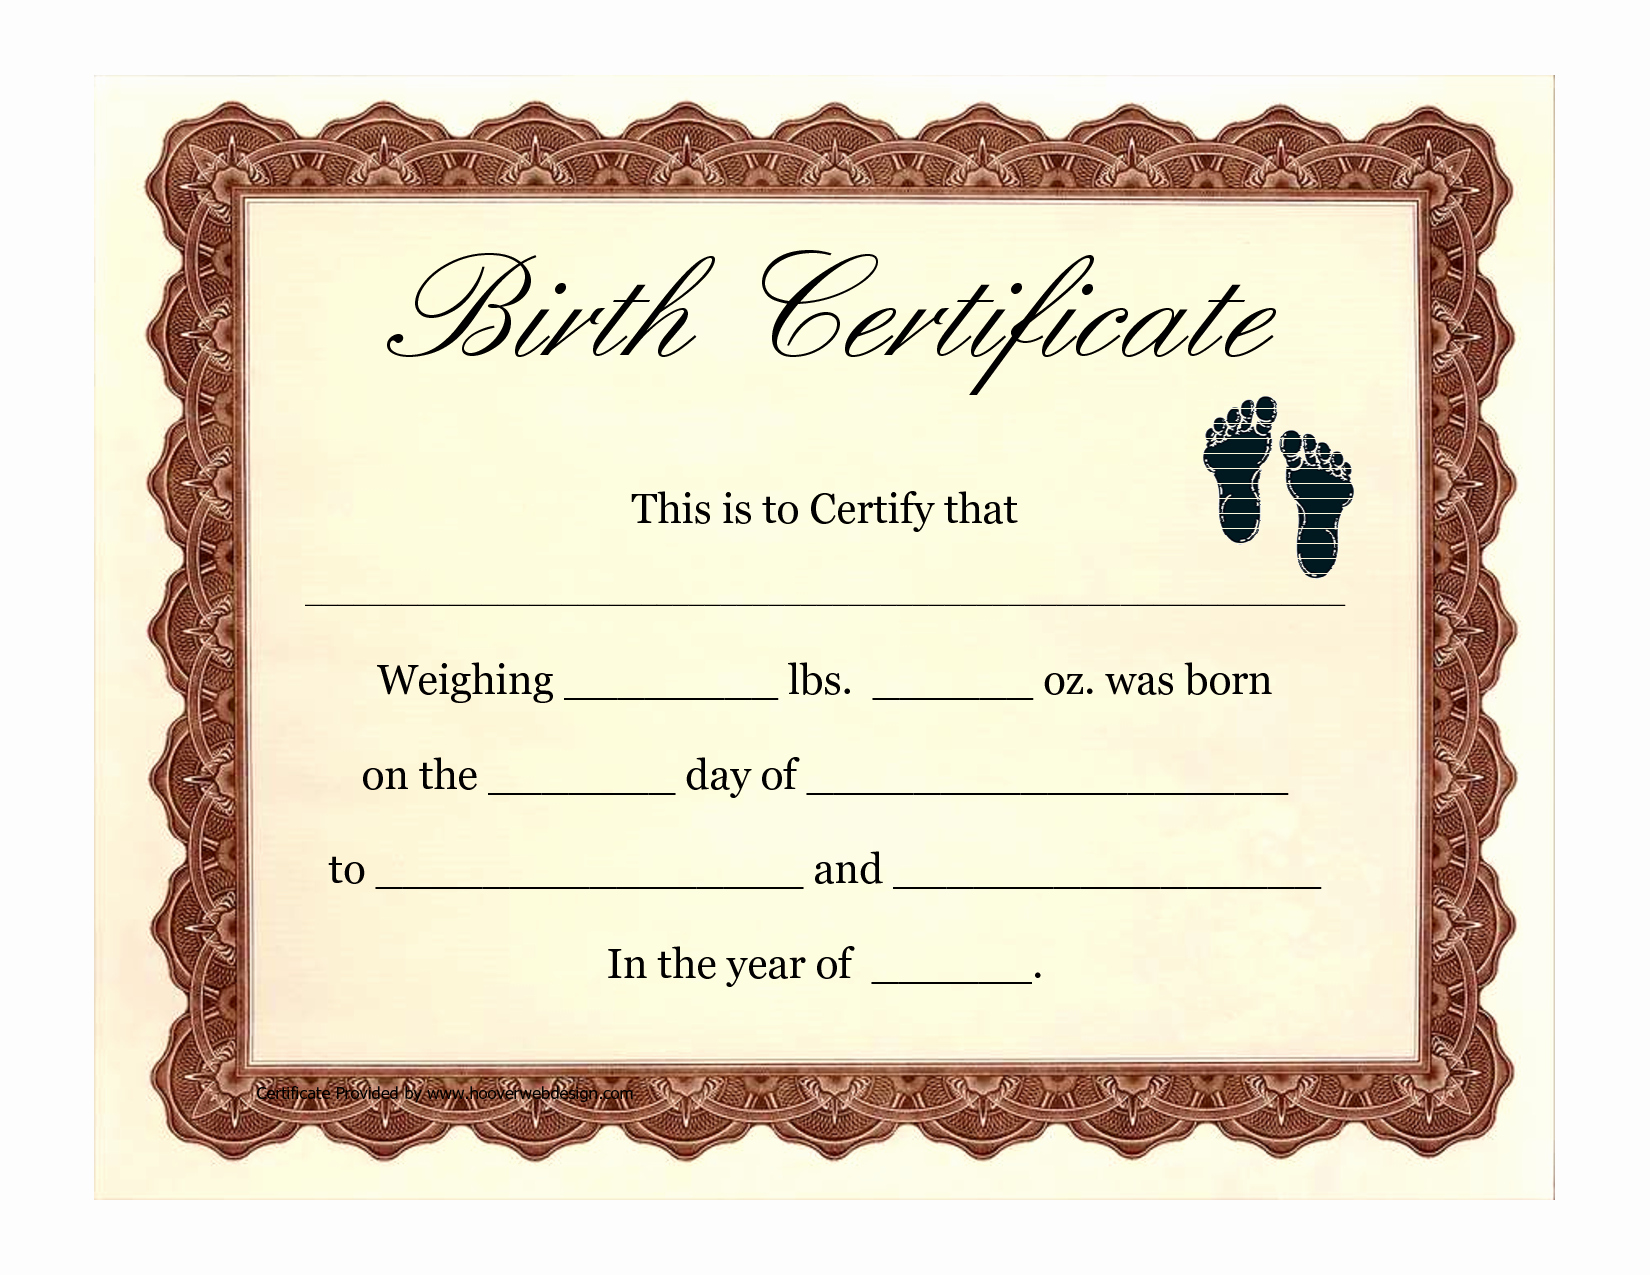 Birth Certificate Template Free Best Of Birth Certificate Template